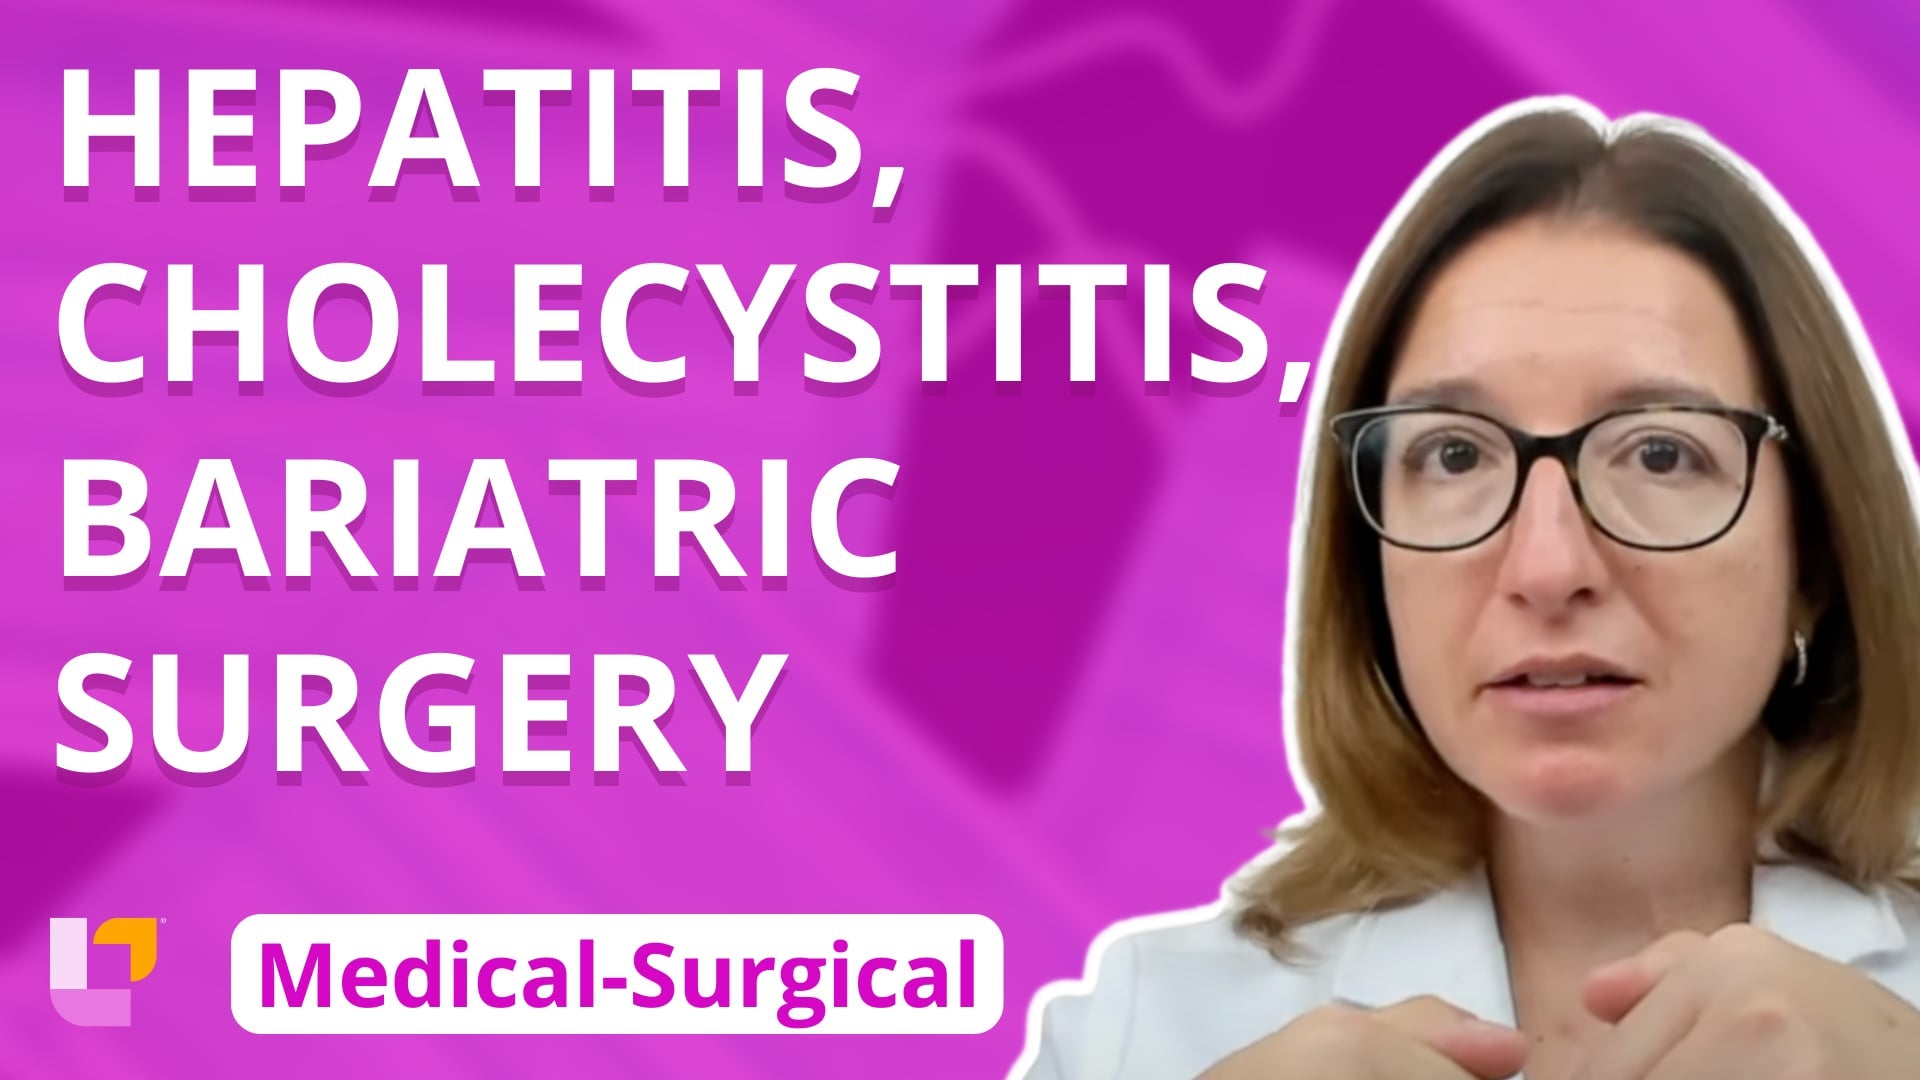 Med-Surg - Gastrointestinal System, part 12: Hepatitis, Cholecystitis, Bariatric Surgery - LevelUpRN